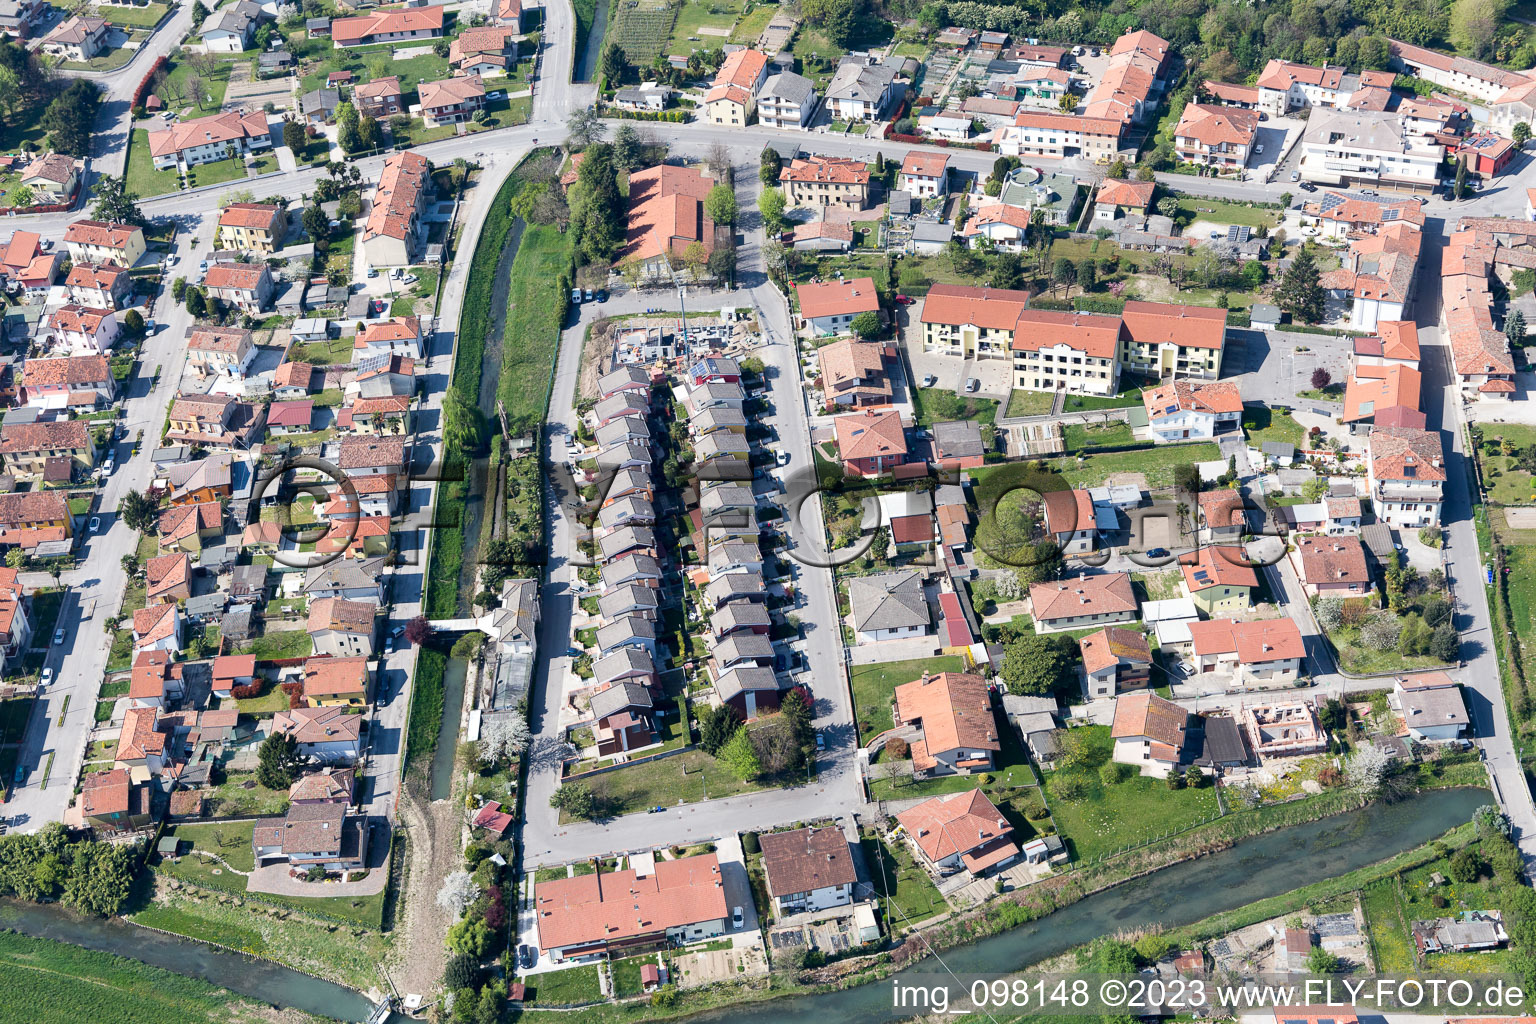 Luftbild von Fossalta di Portogruaro im Bundesland Venetien, Italien